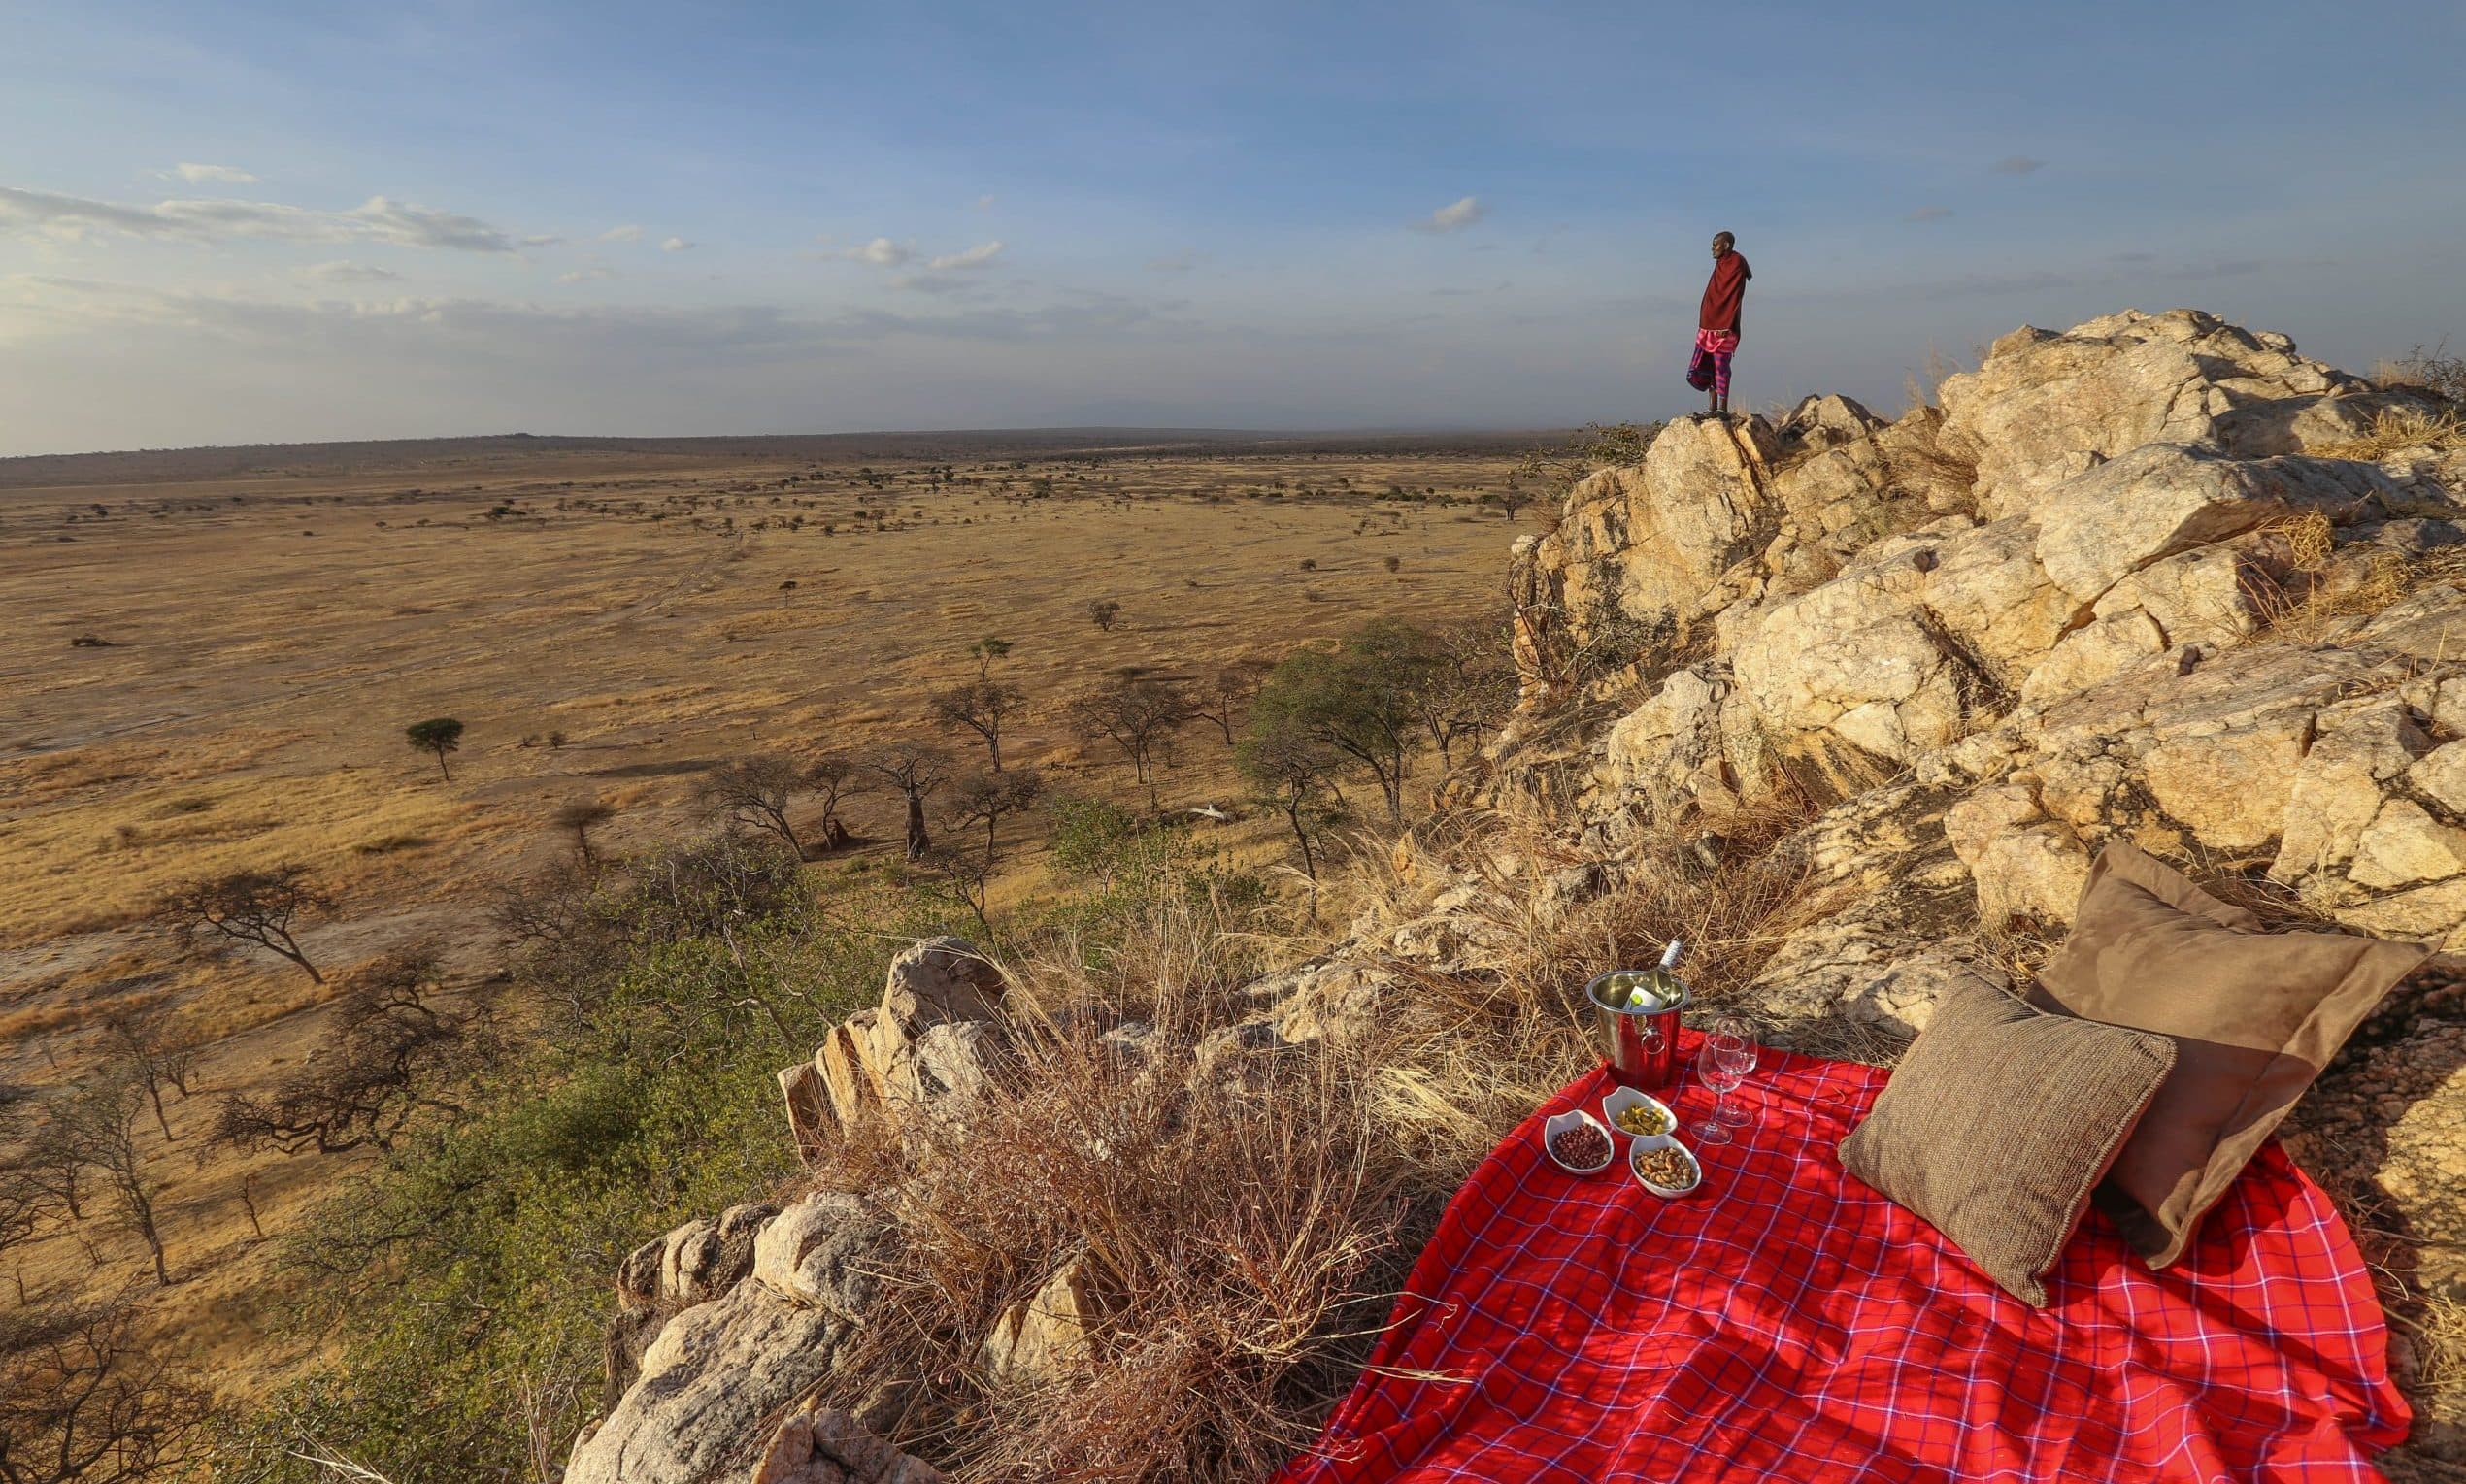 Masai man on a ridge